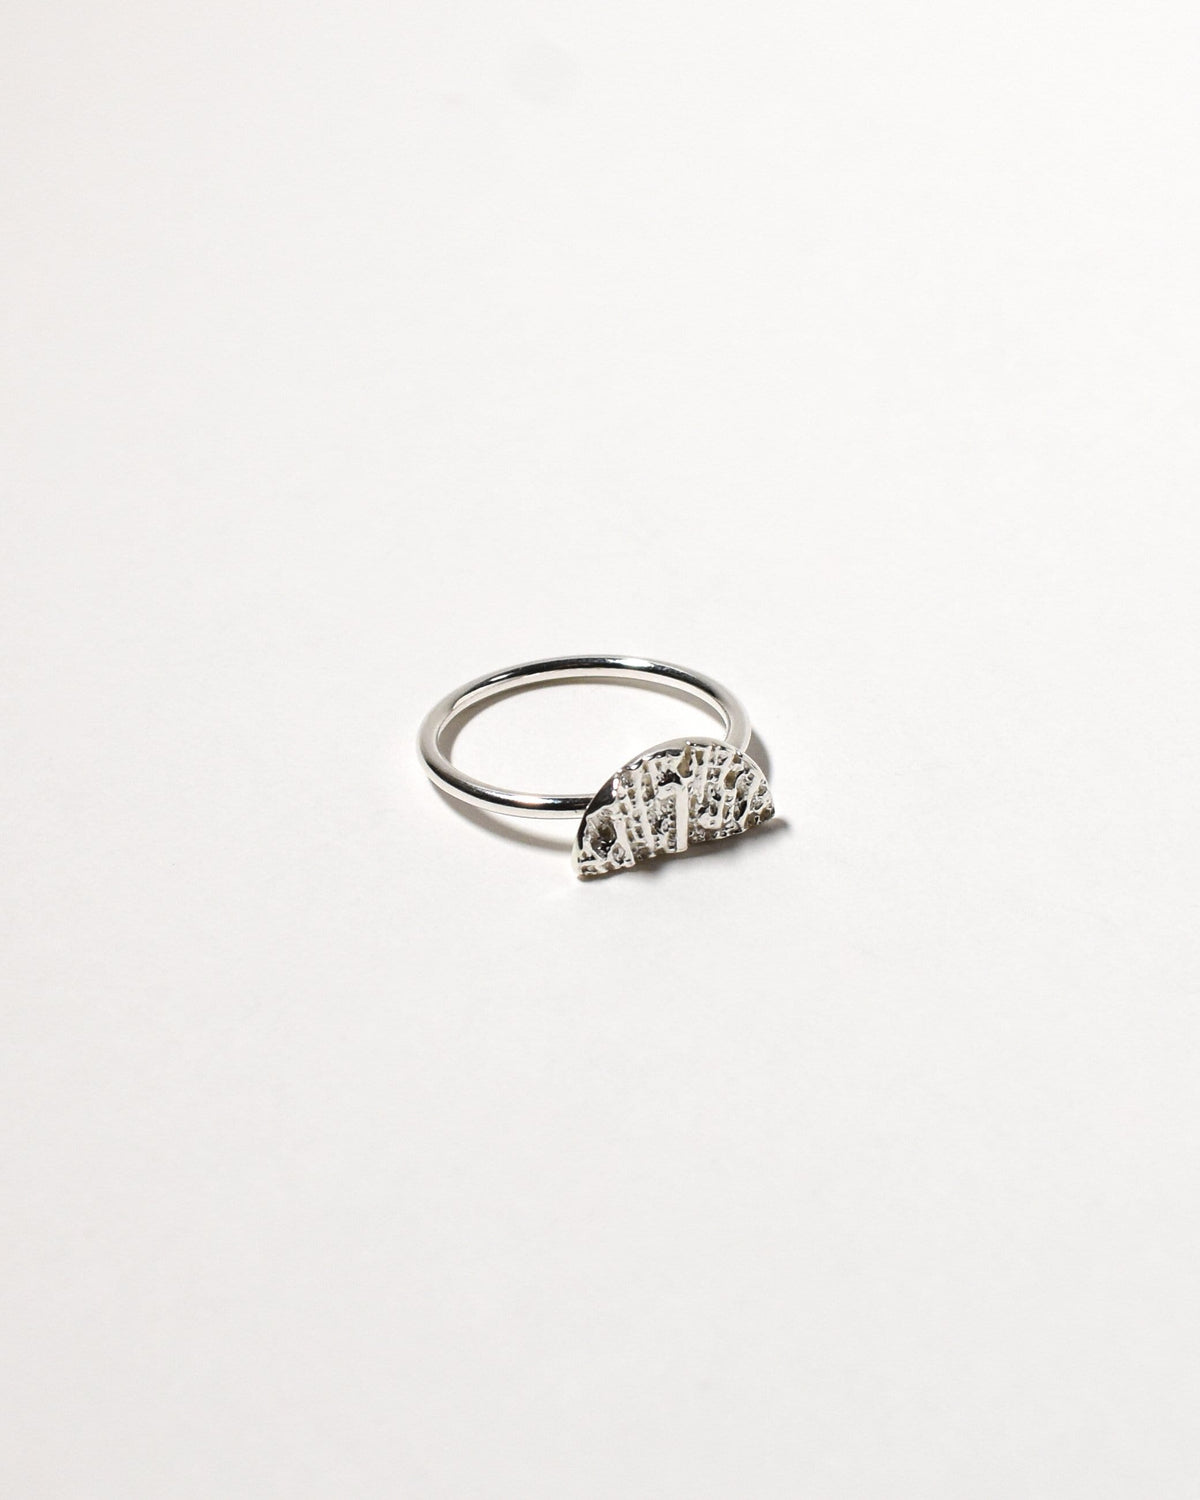 Wanda Ring (Small), Sterling Silver